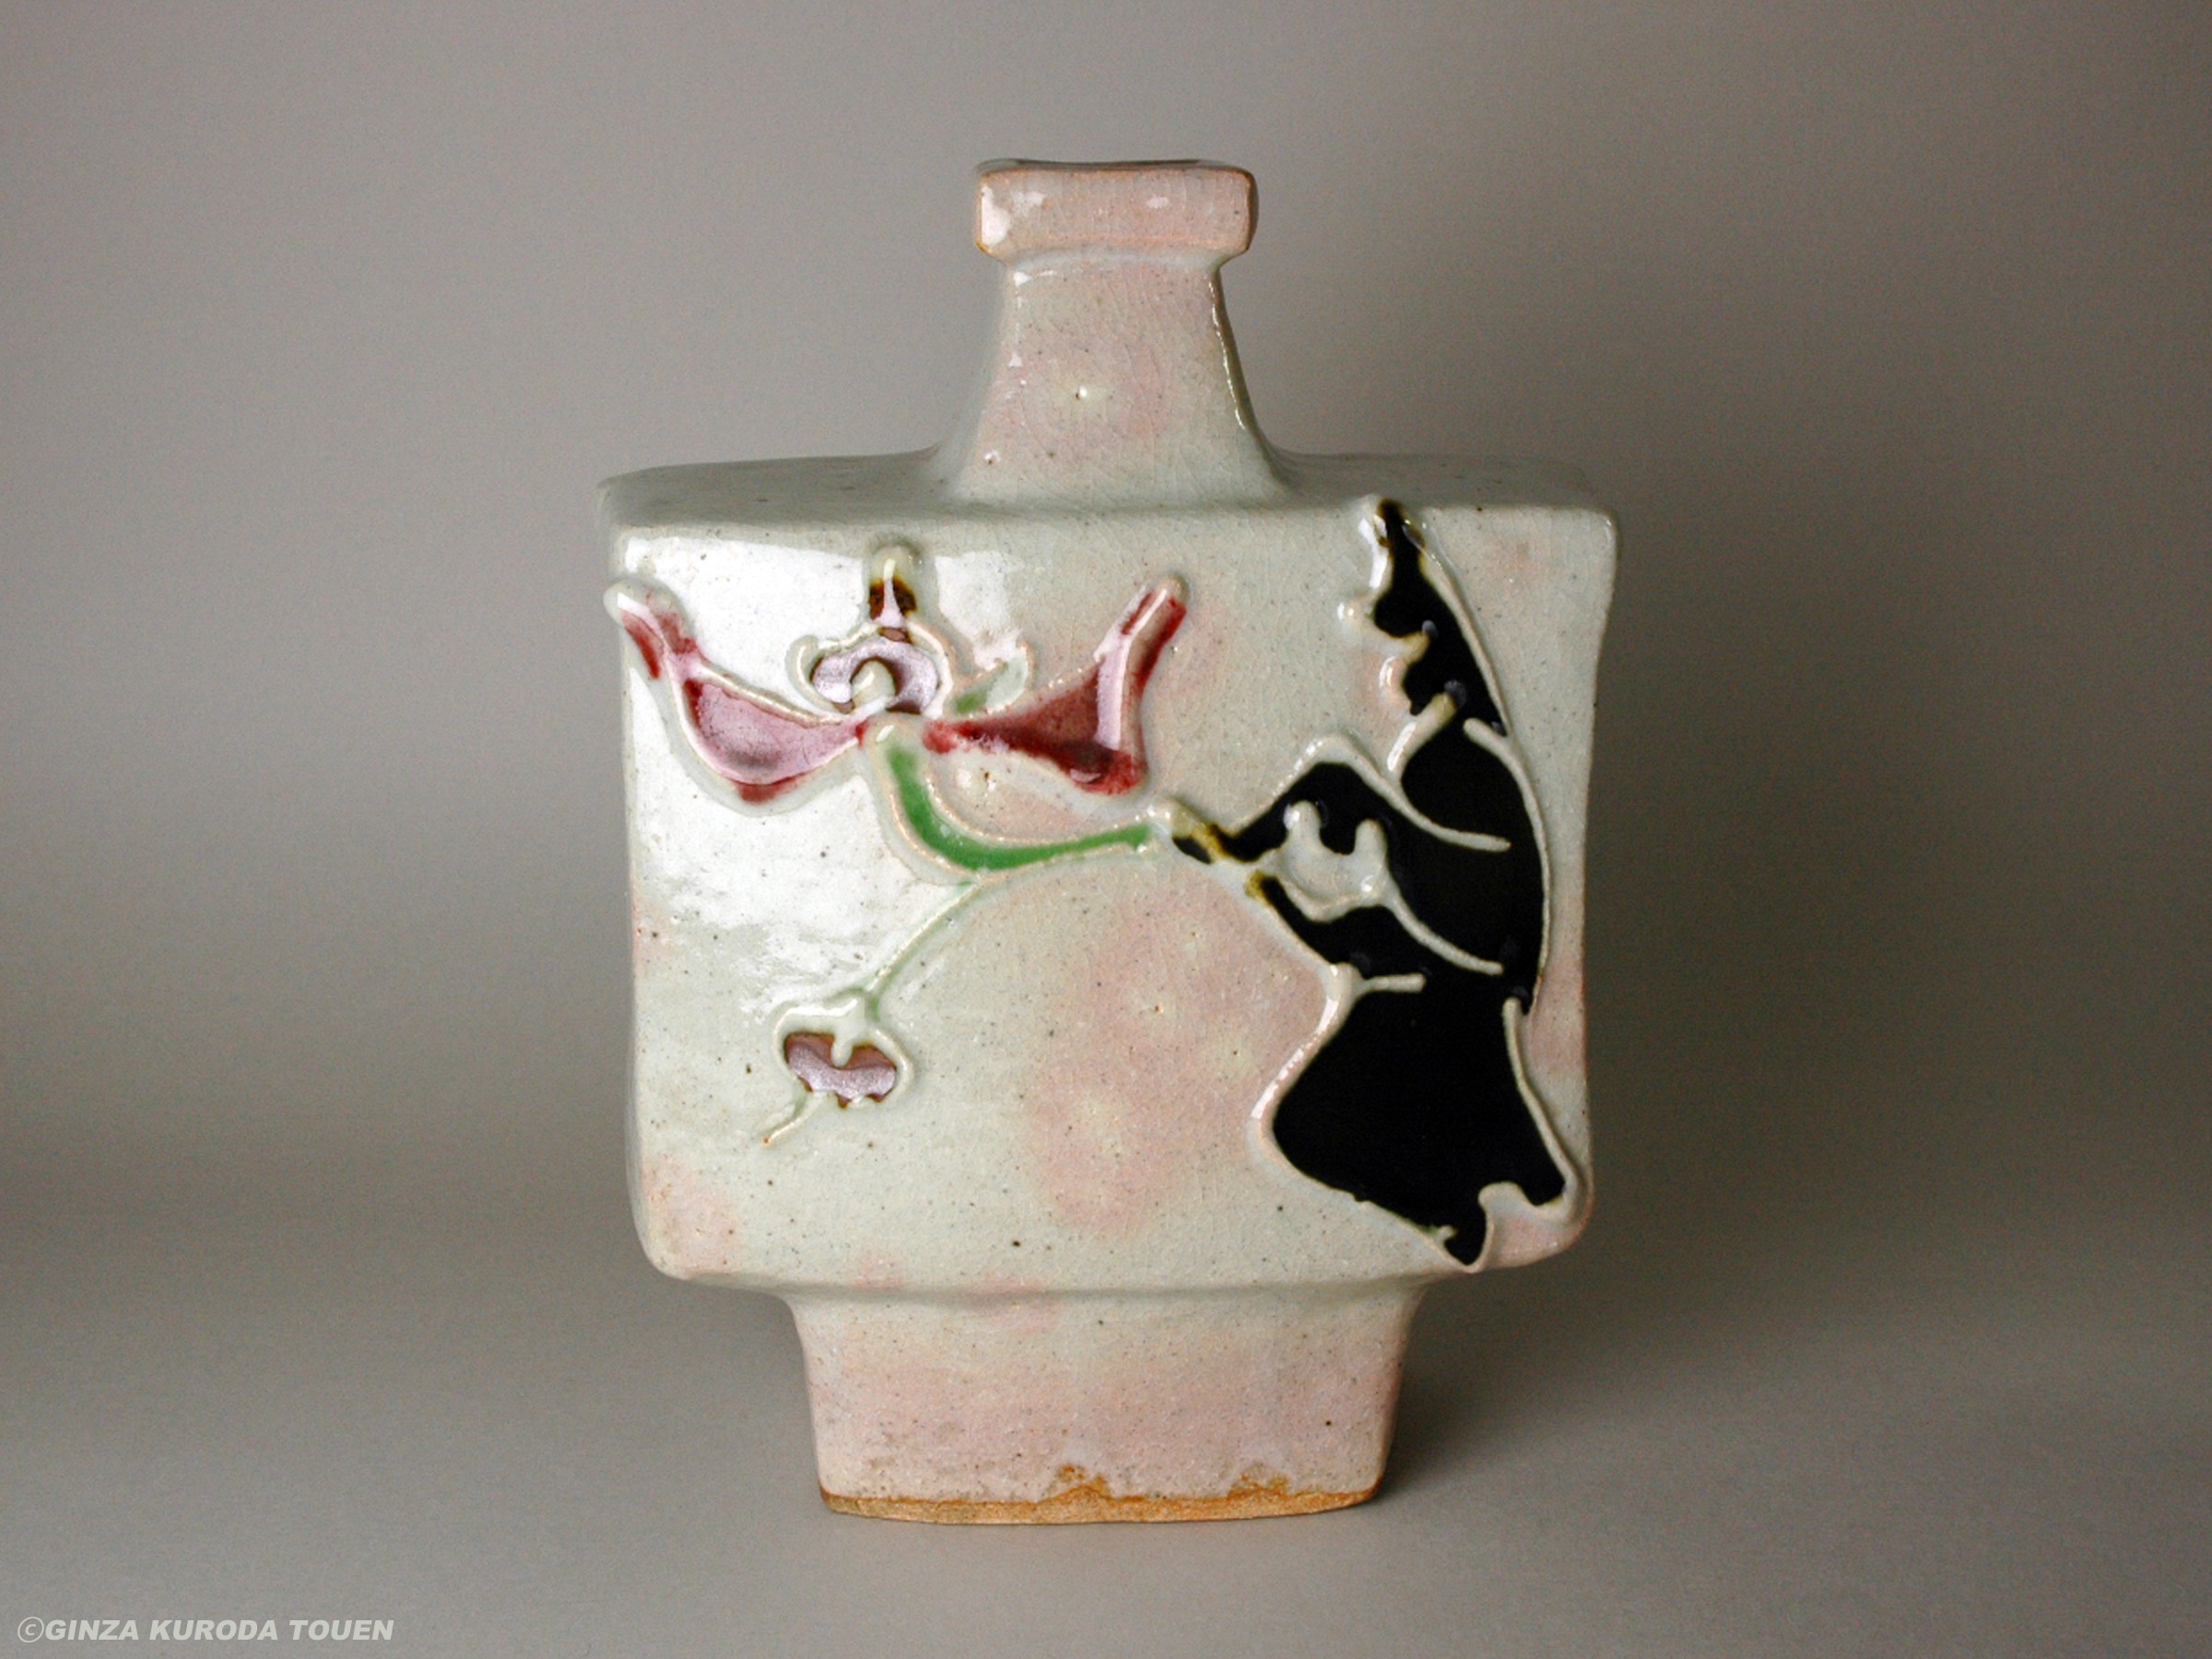 Kanjiro Kawai: Flat vase, Flower and hand design